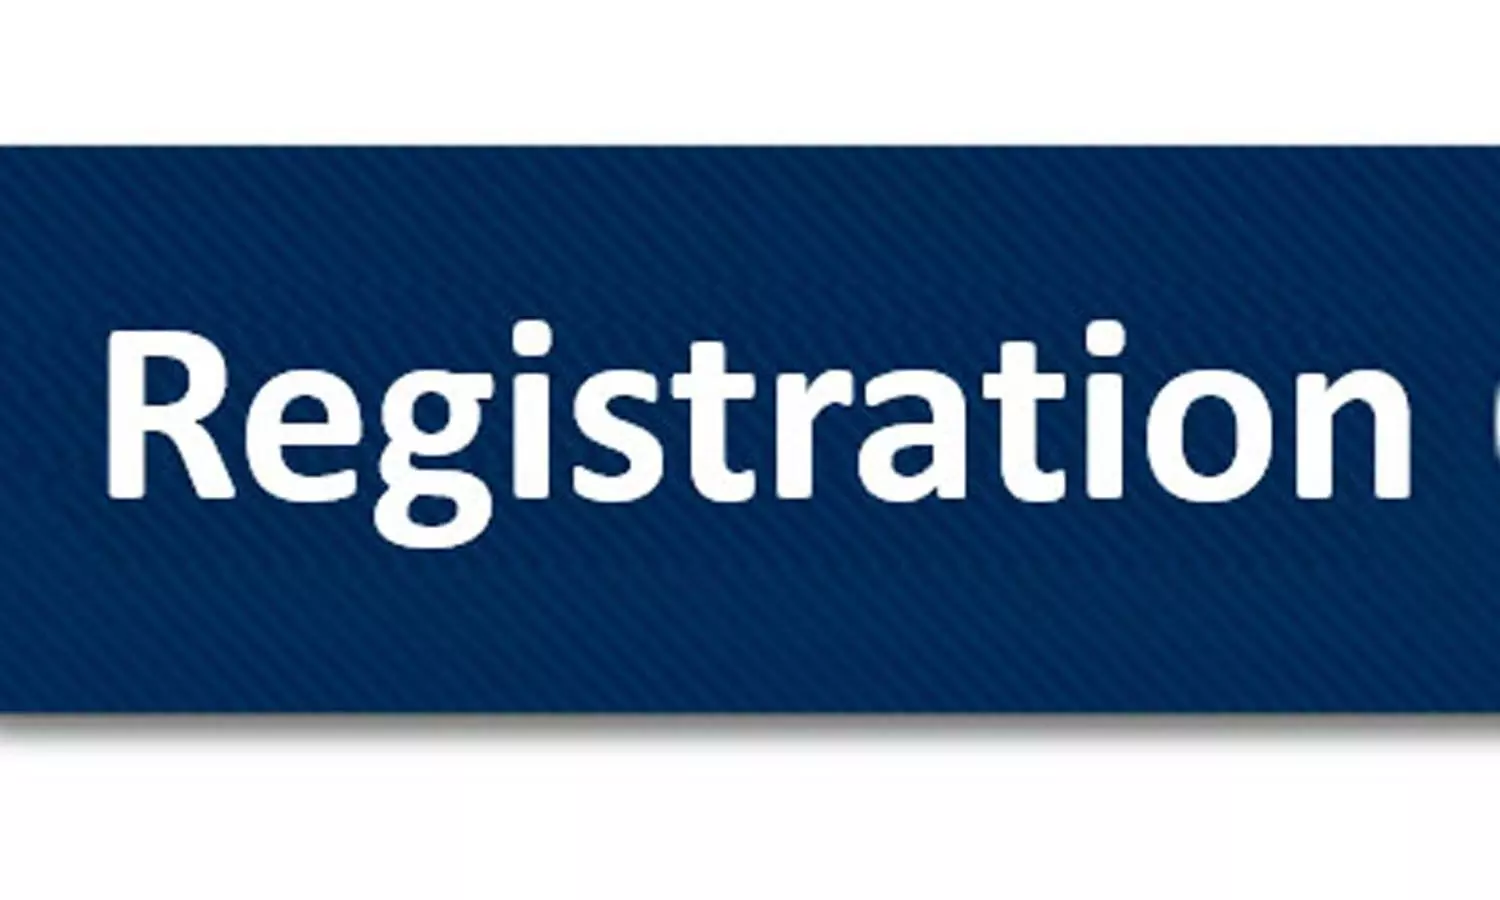 BSc Nursing, MSc Nursing at AIIMS: Dates for final status of Basic Registration rescheduled